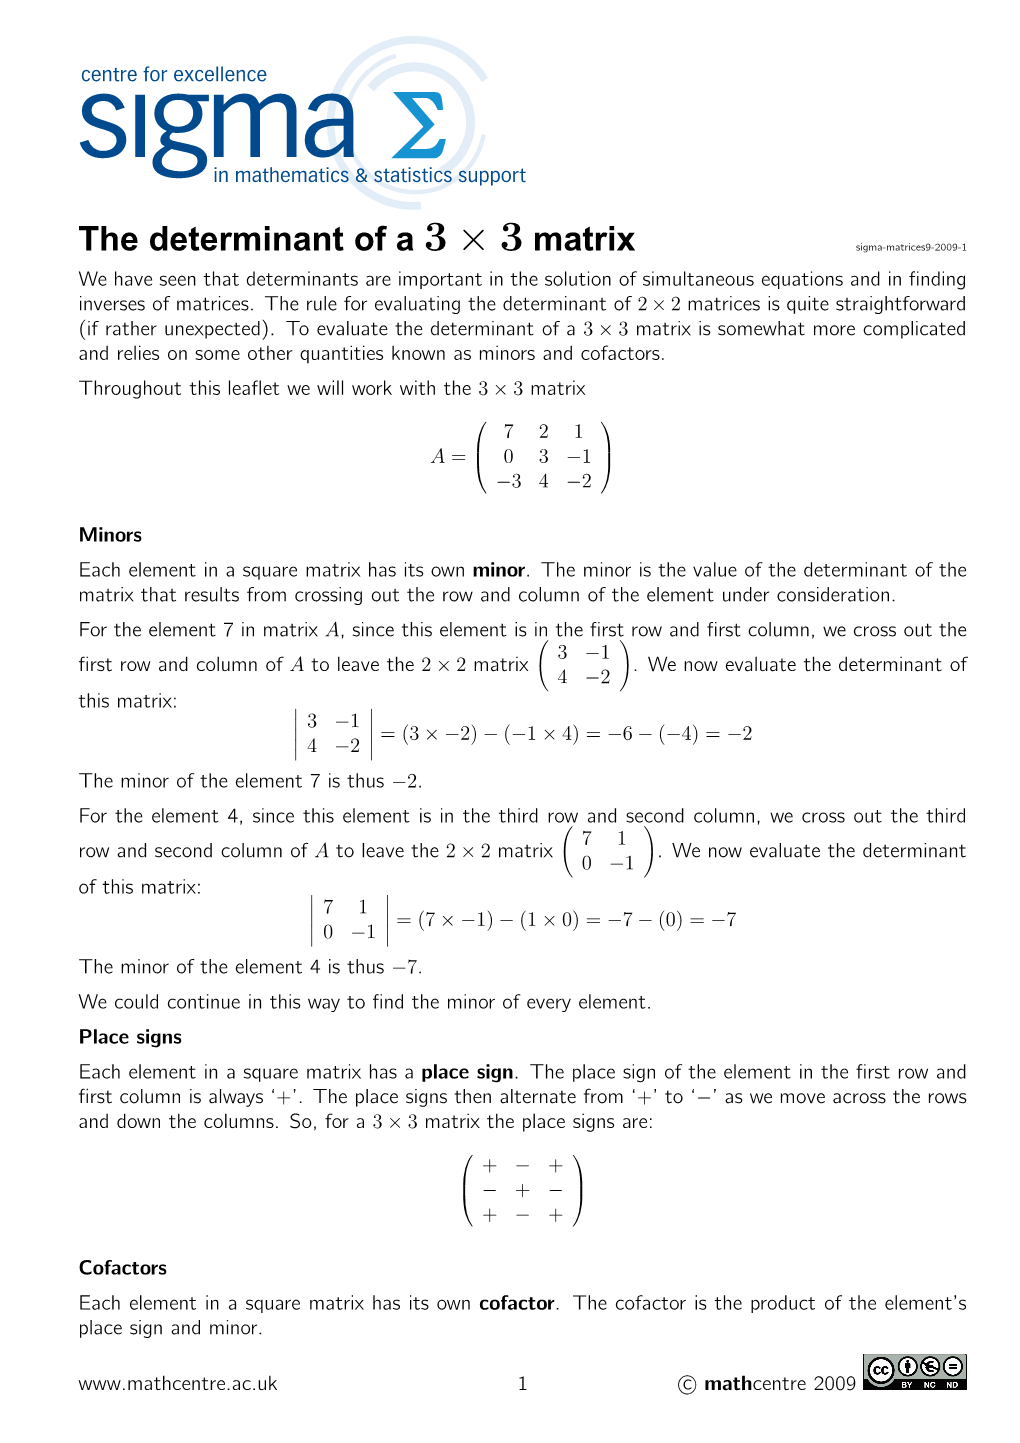 The Determinant of a 3X3 Matrix